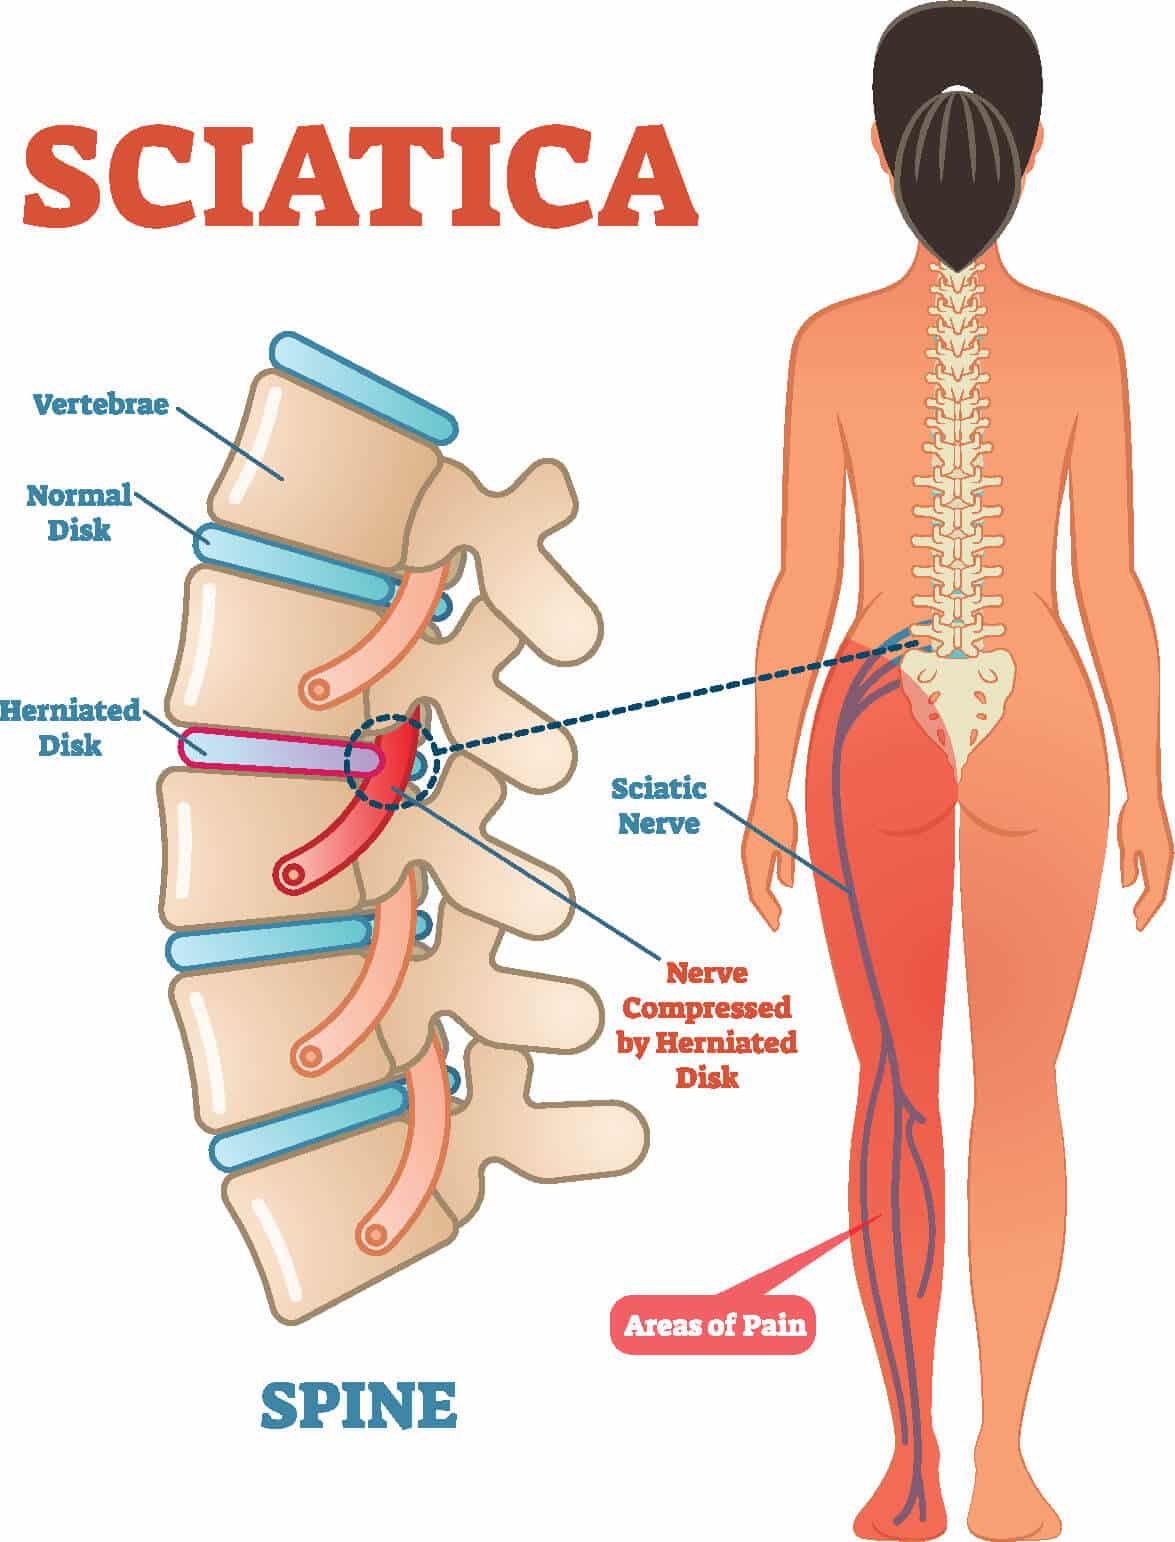 Medical diagram of the sciatic nerve and sciatica